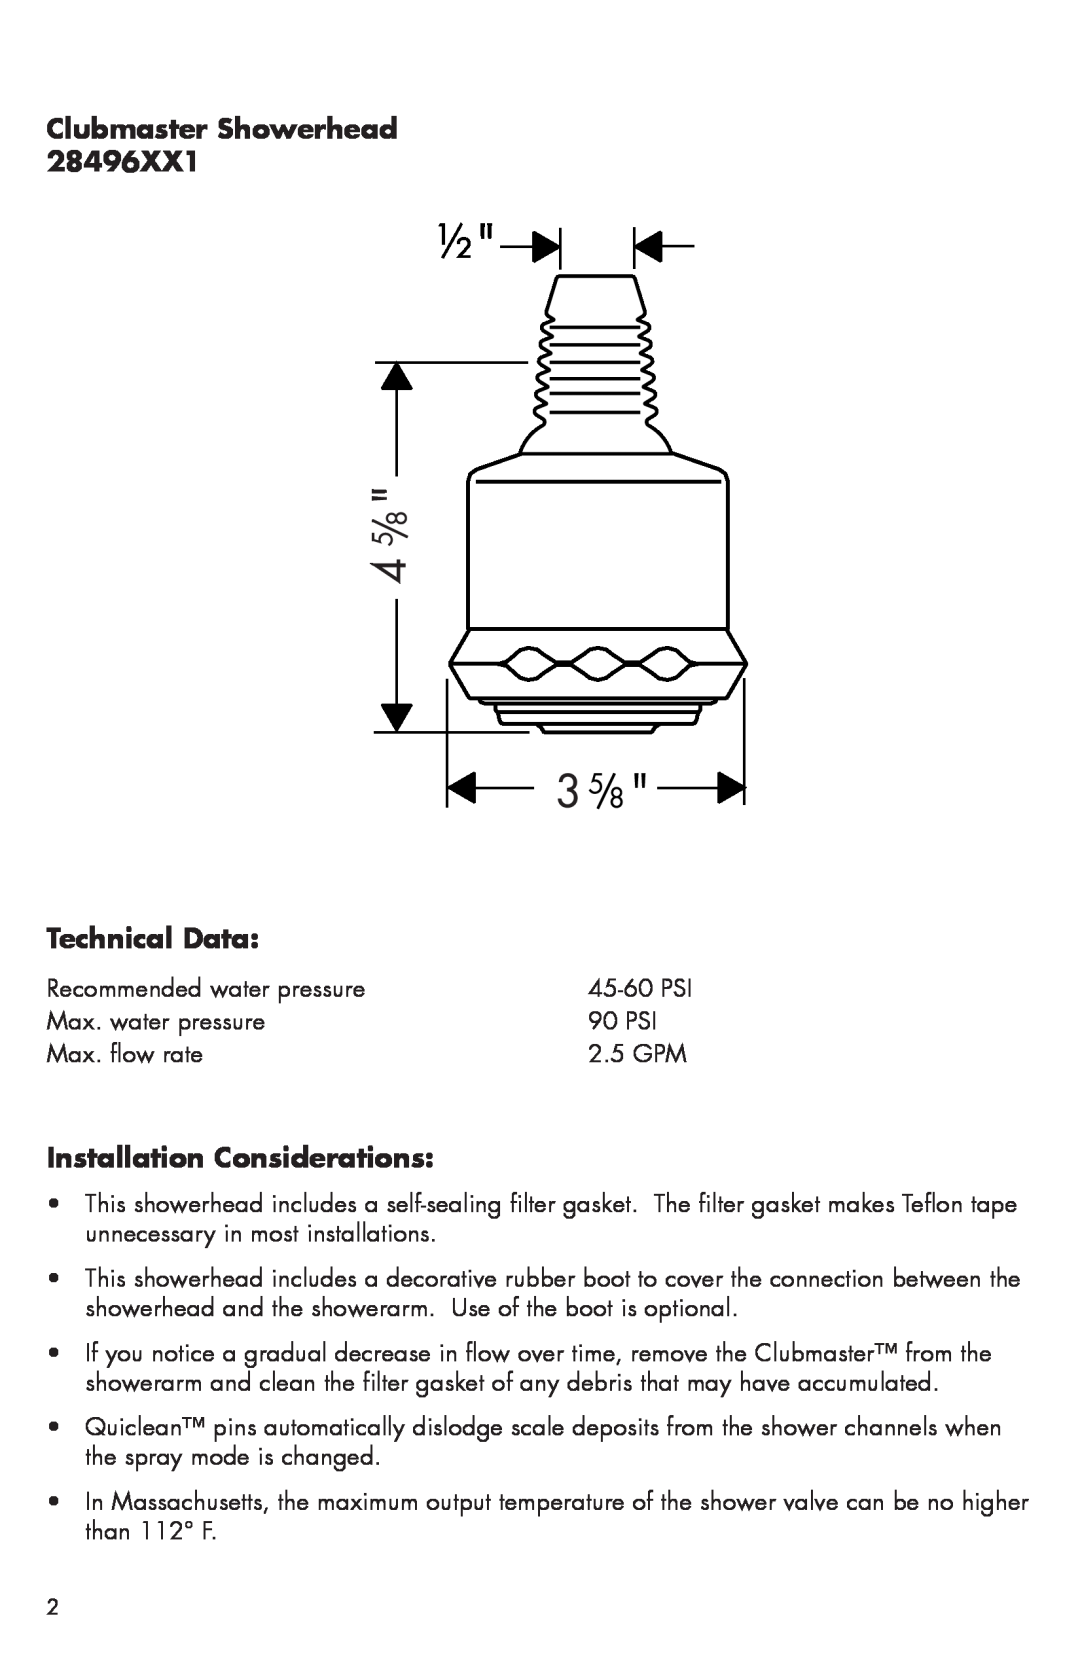 Axor 28496xx1 installation instructions Clubmaster Showerhead Technical Data, Installation Considerations 